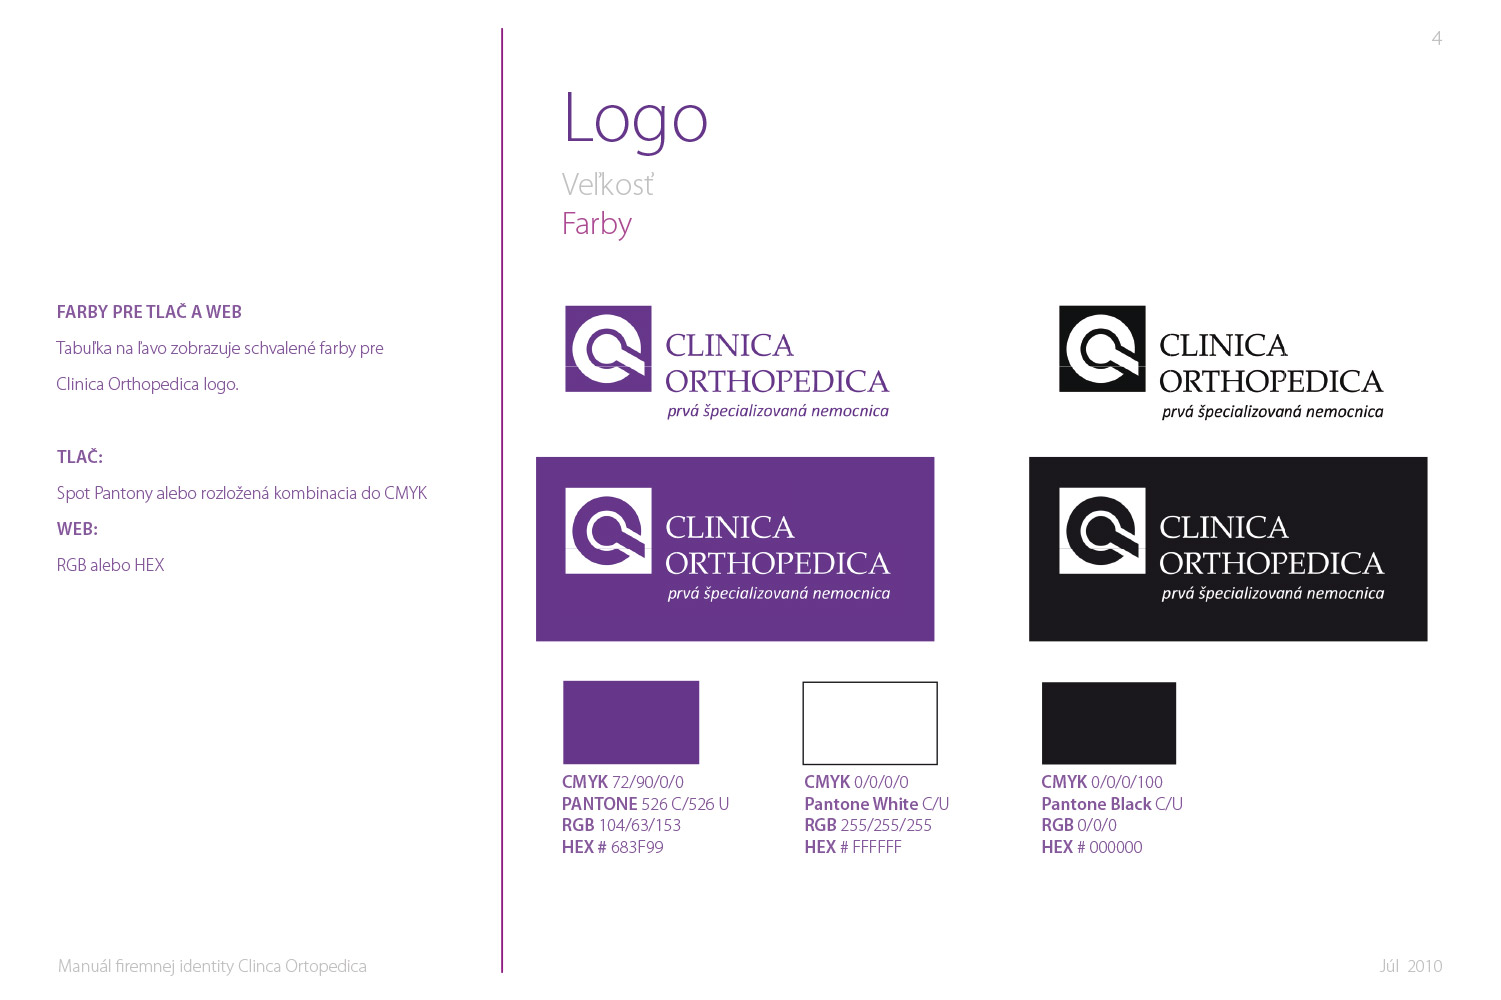 Clinica Orthopedica, corporate identity image